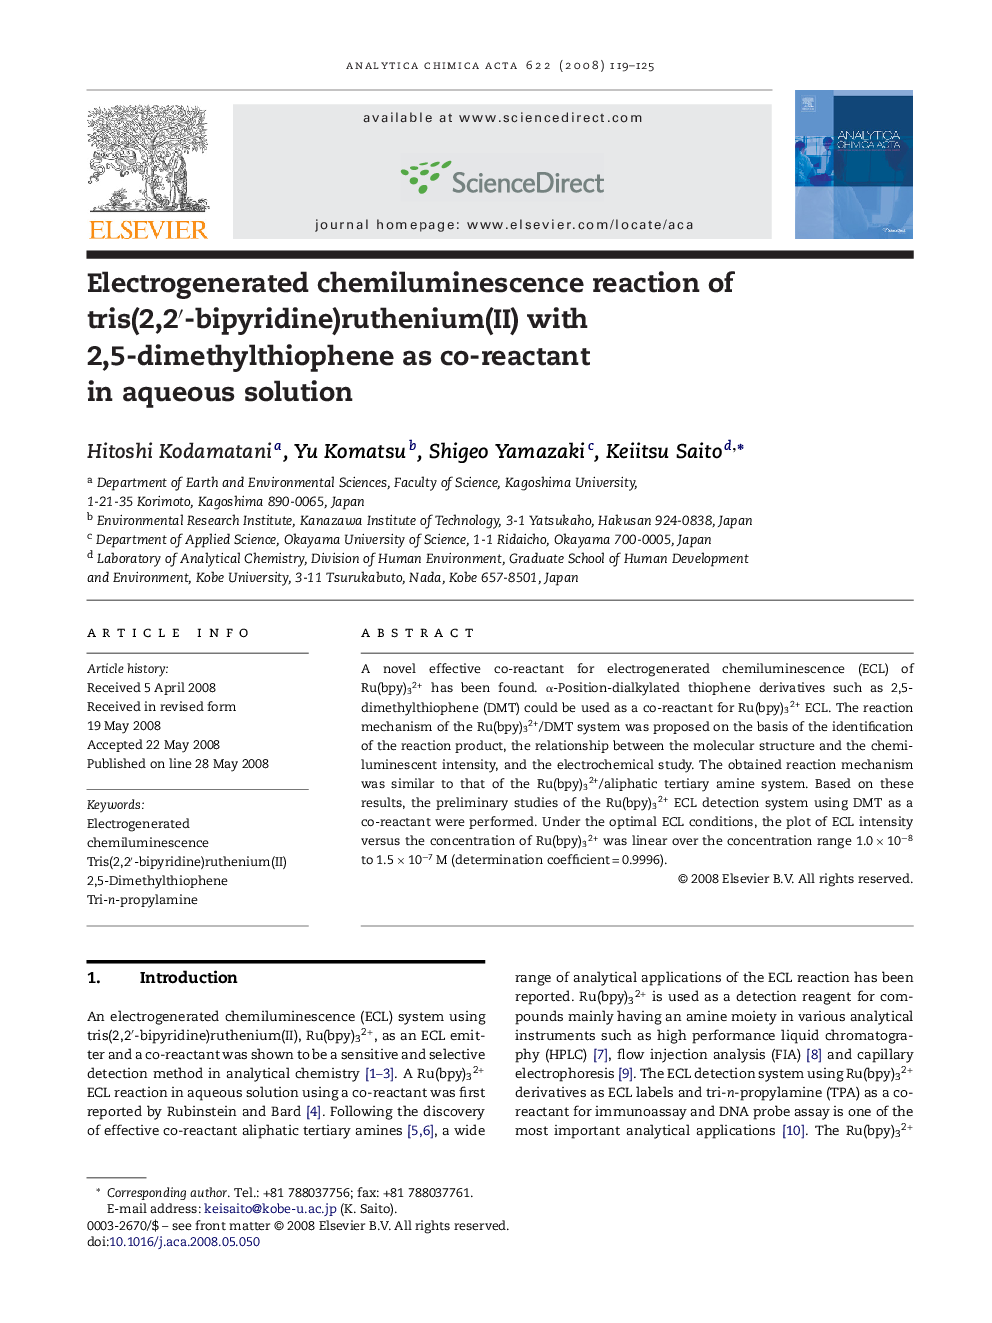 Electrogenerated chemiluminescence reaction of tris(2,2′-bipyridine)ruthenium(II) with 2,5-dimethylthiophene as co-reactant in aqueous solution